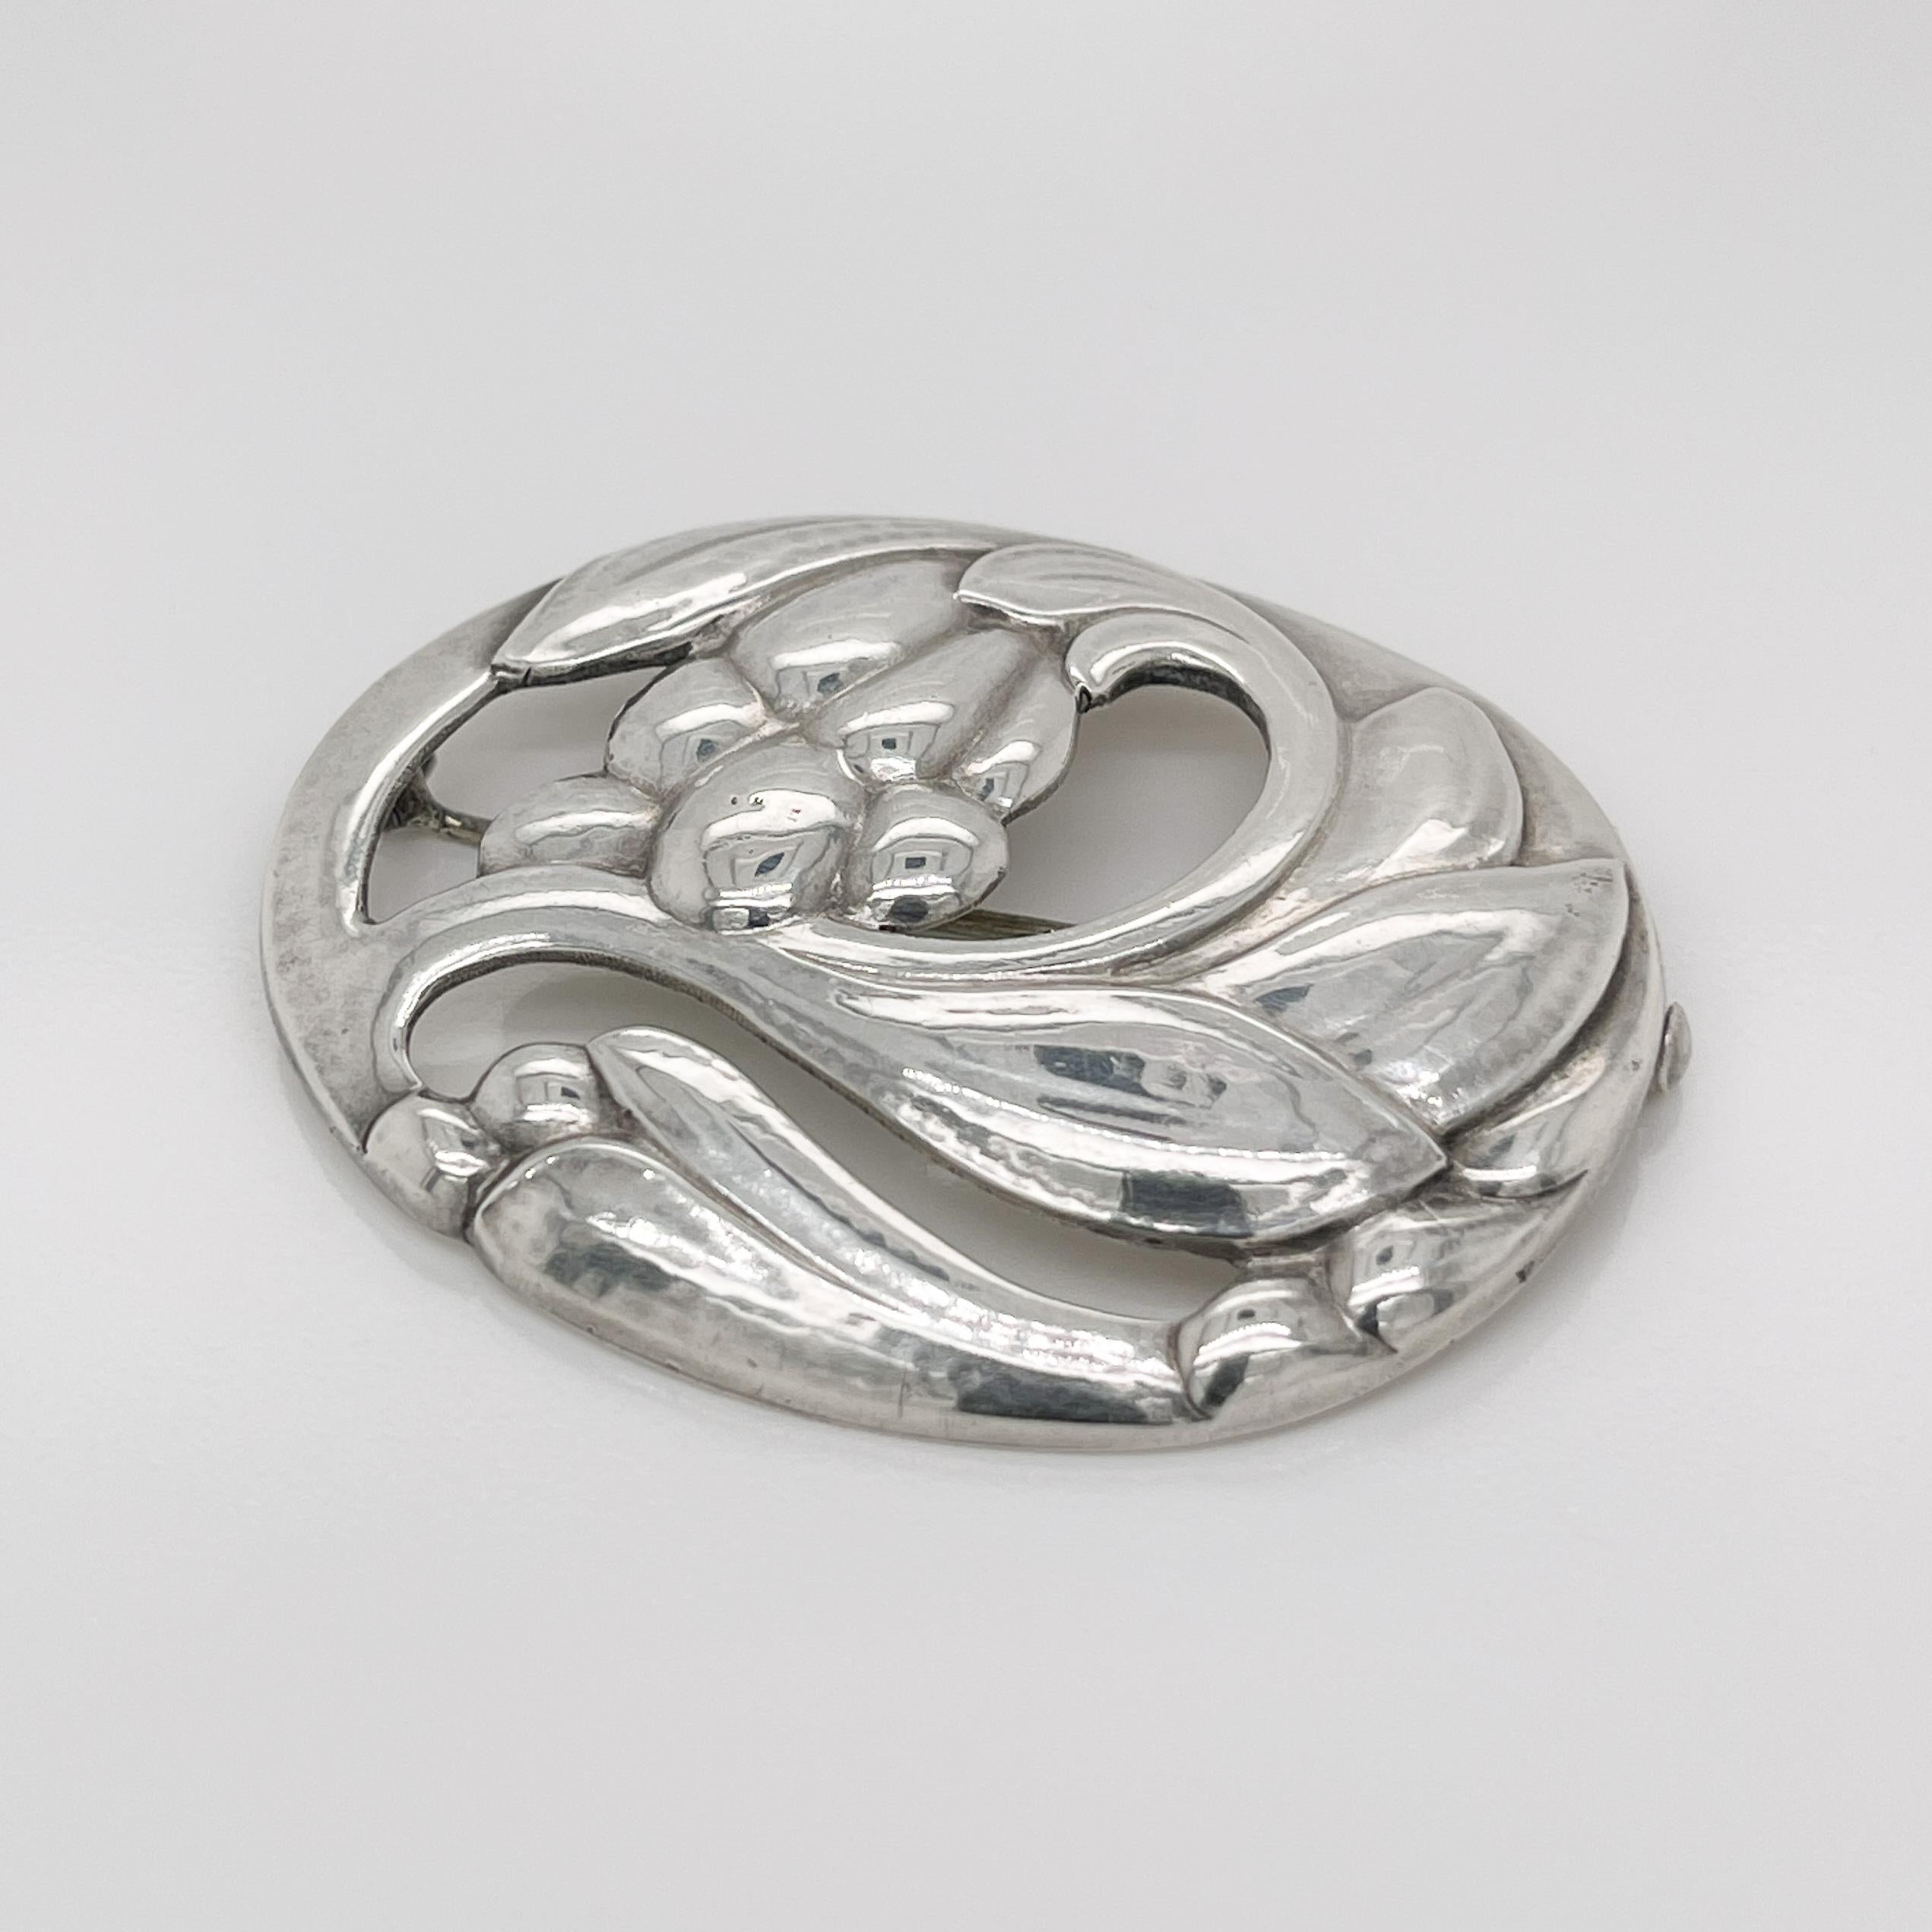 Georg Jensen Art Nouveau Sterling Silver Brooch No. 65 For Sale 2